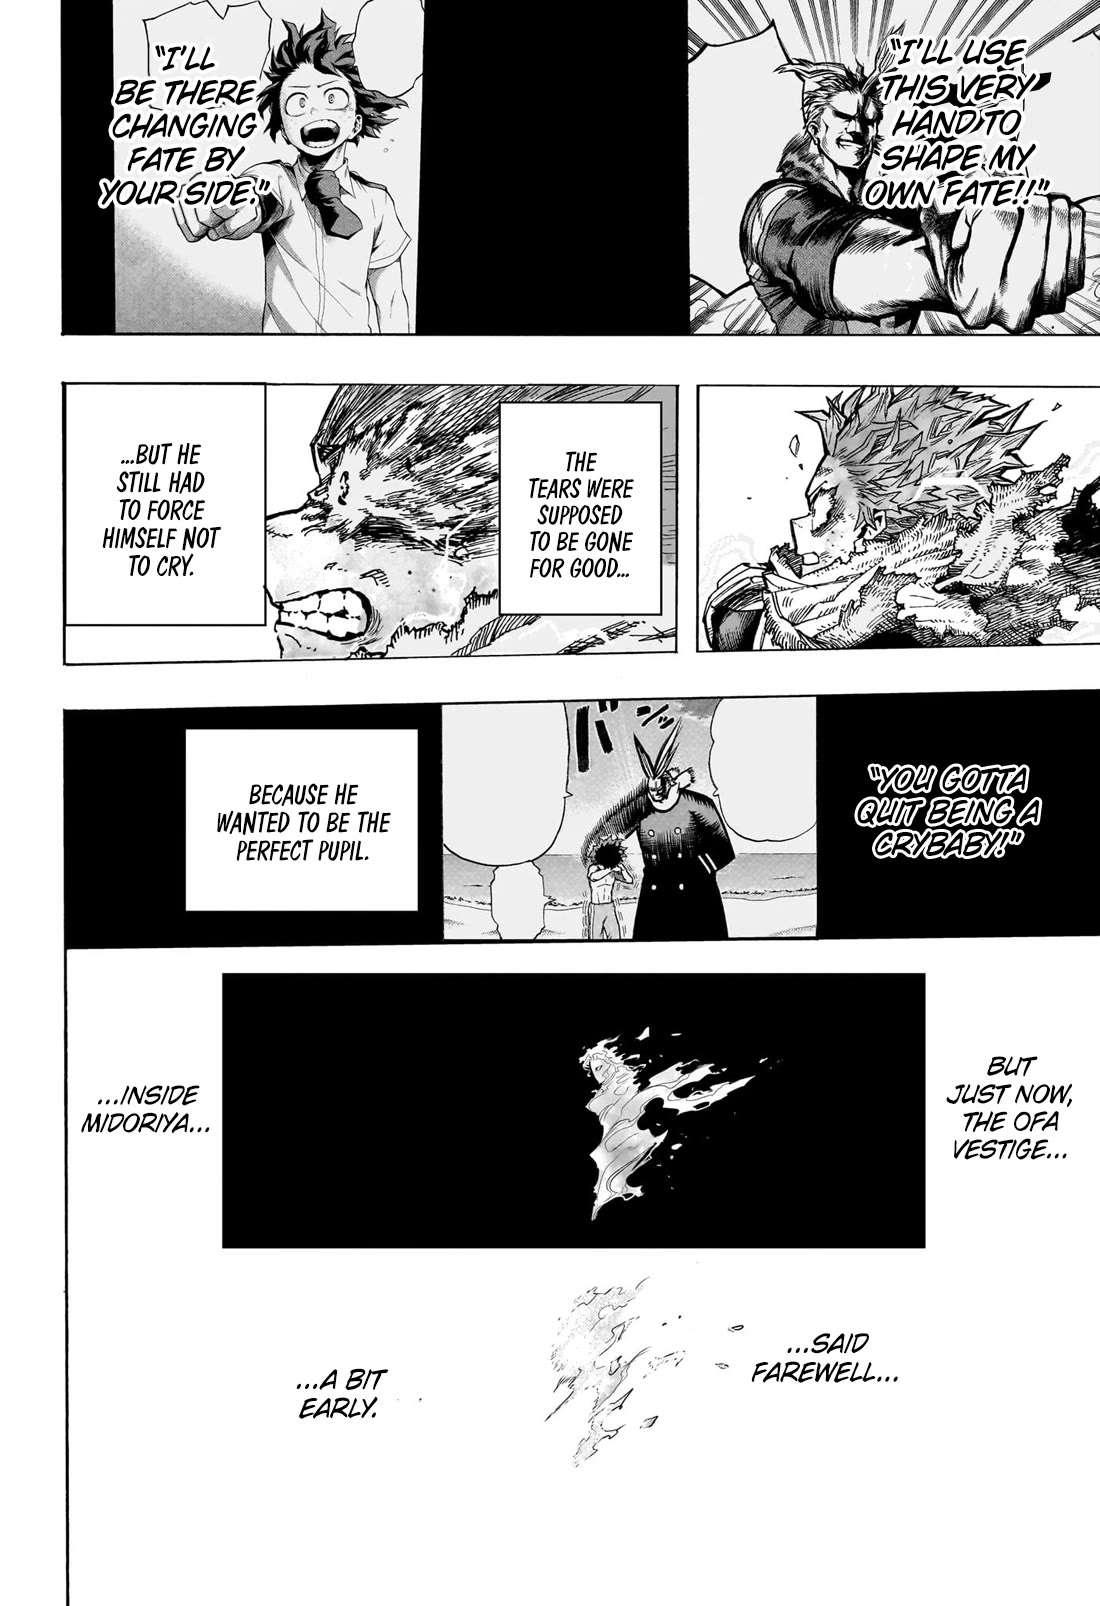 Boku no Hero Academia Vol.10 Ch.402 Page 11 - Mangago